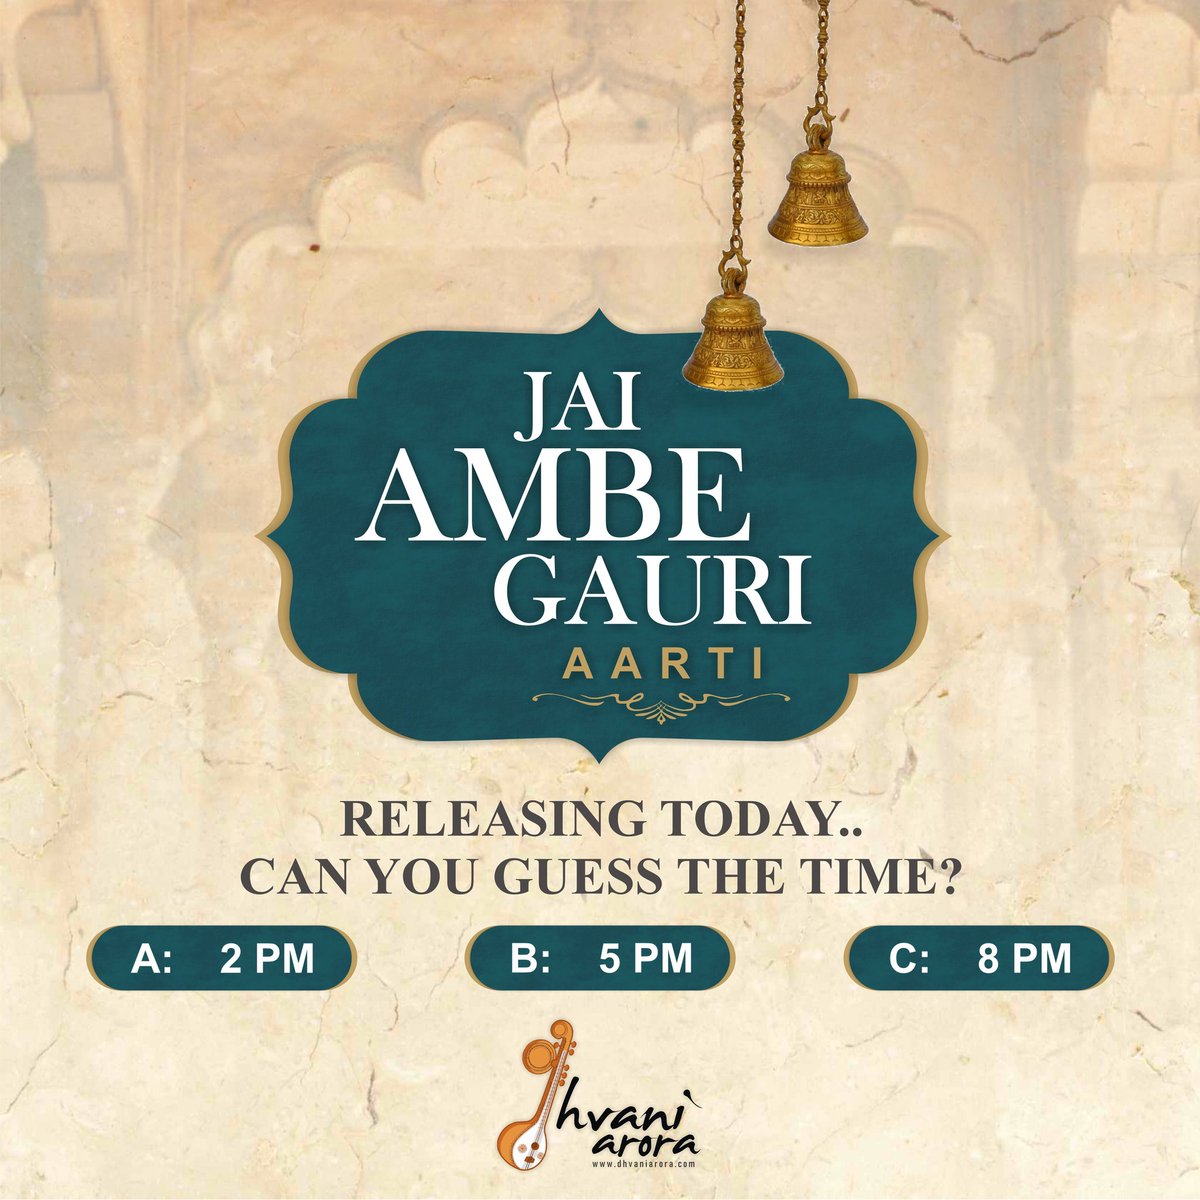 Jai Ambe Gauri - Aarti
Releasing today .. can you guess the time? 
#guessthetime #jaiambegauri #aarti #dhvaniarora